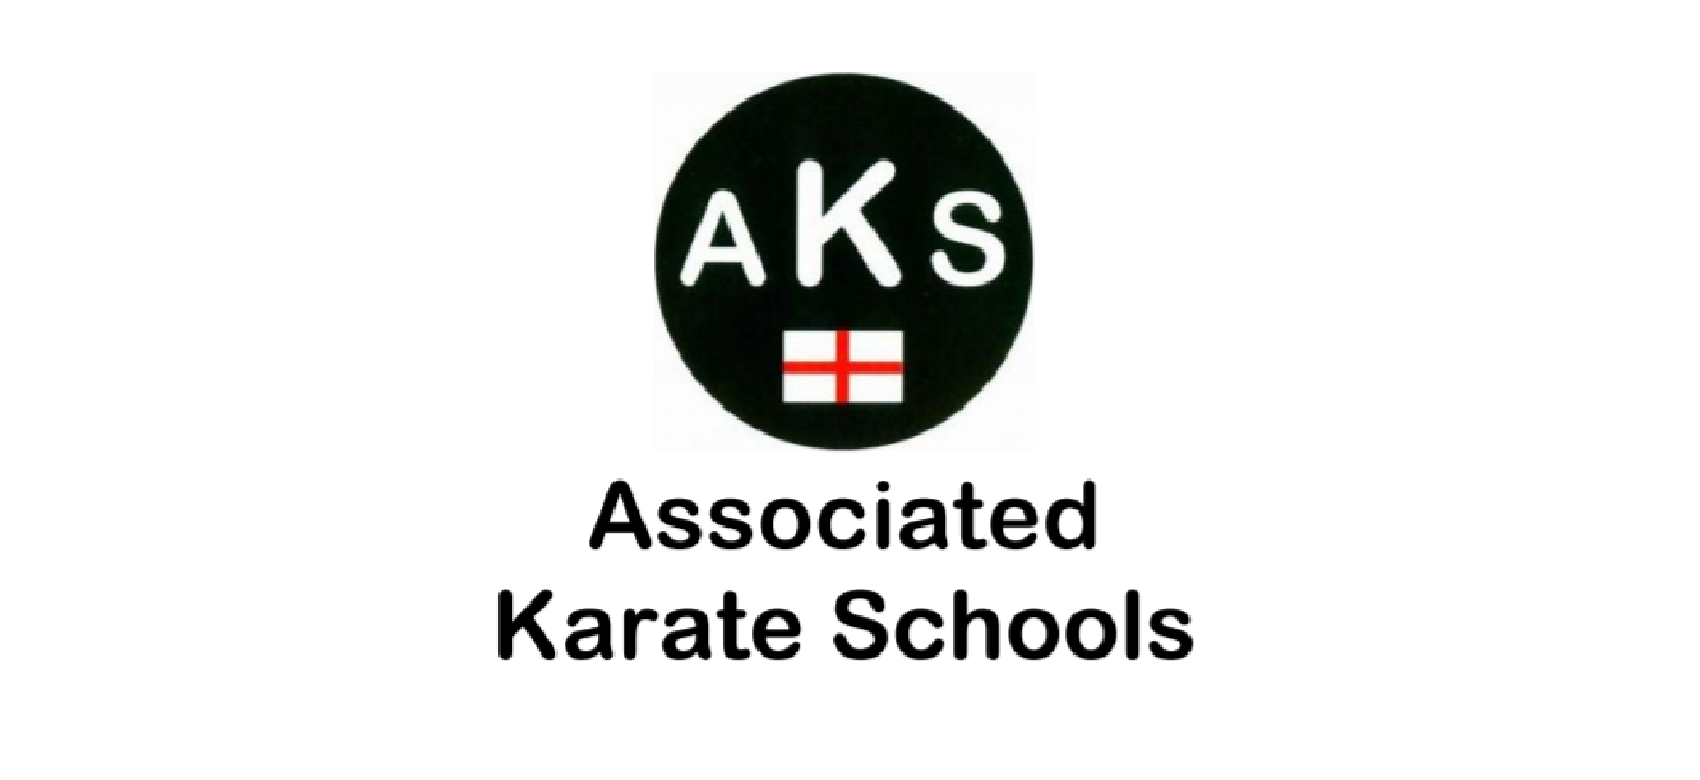 AKS Associated Karate Schools